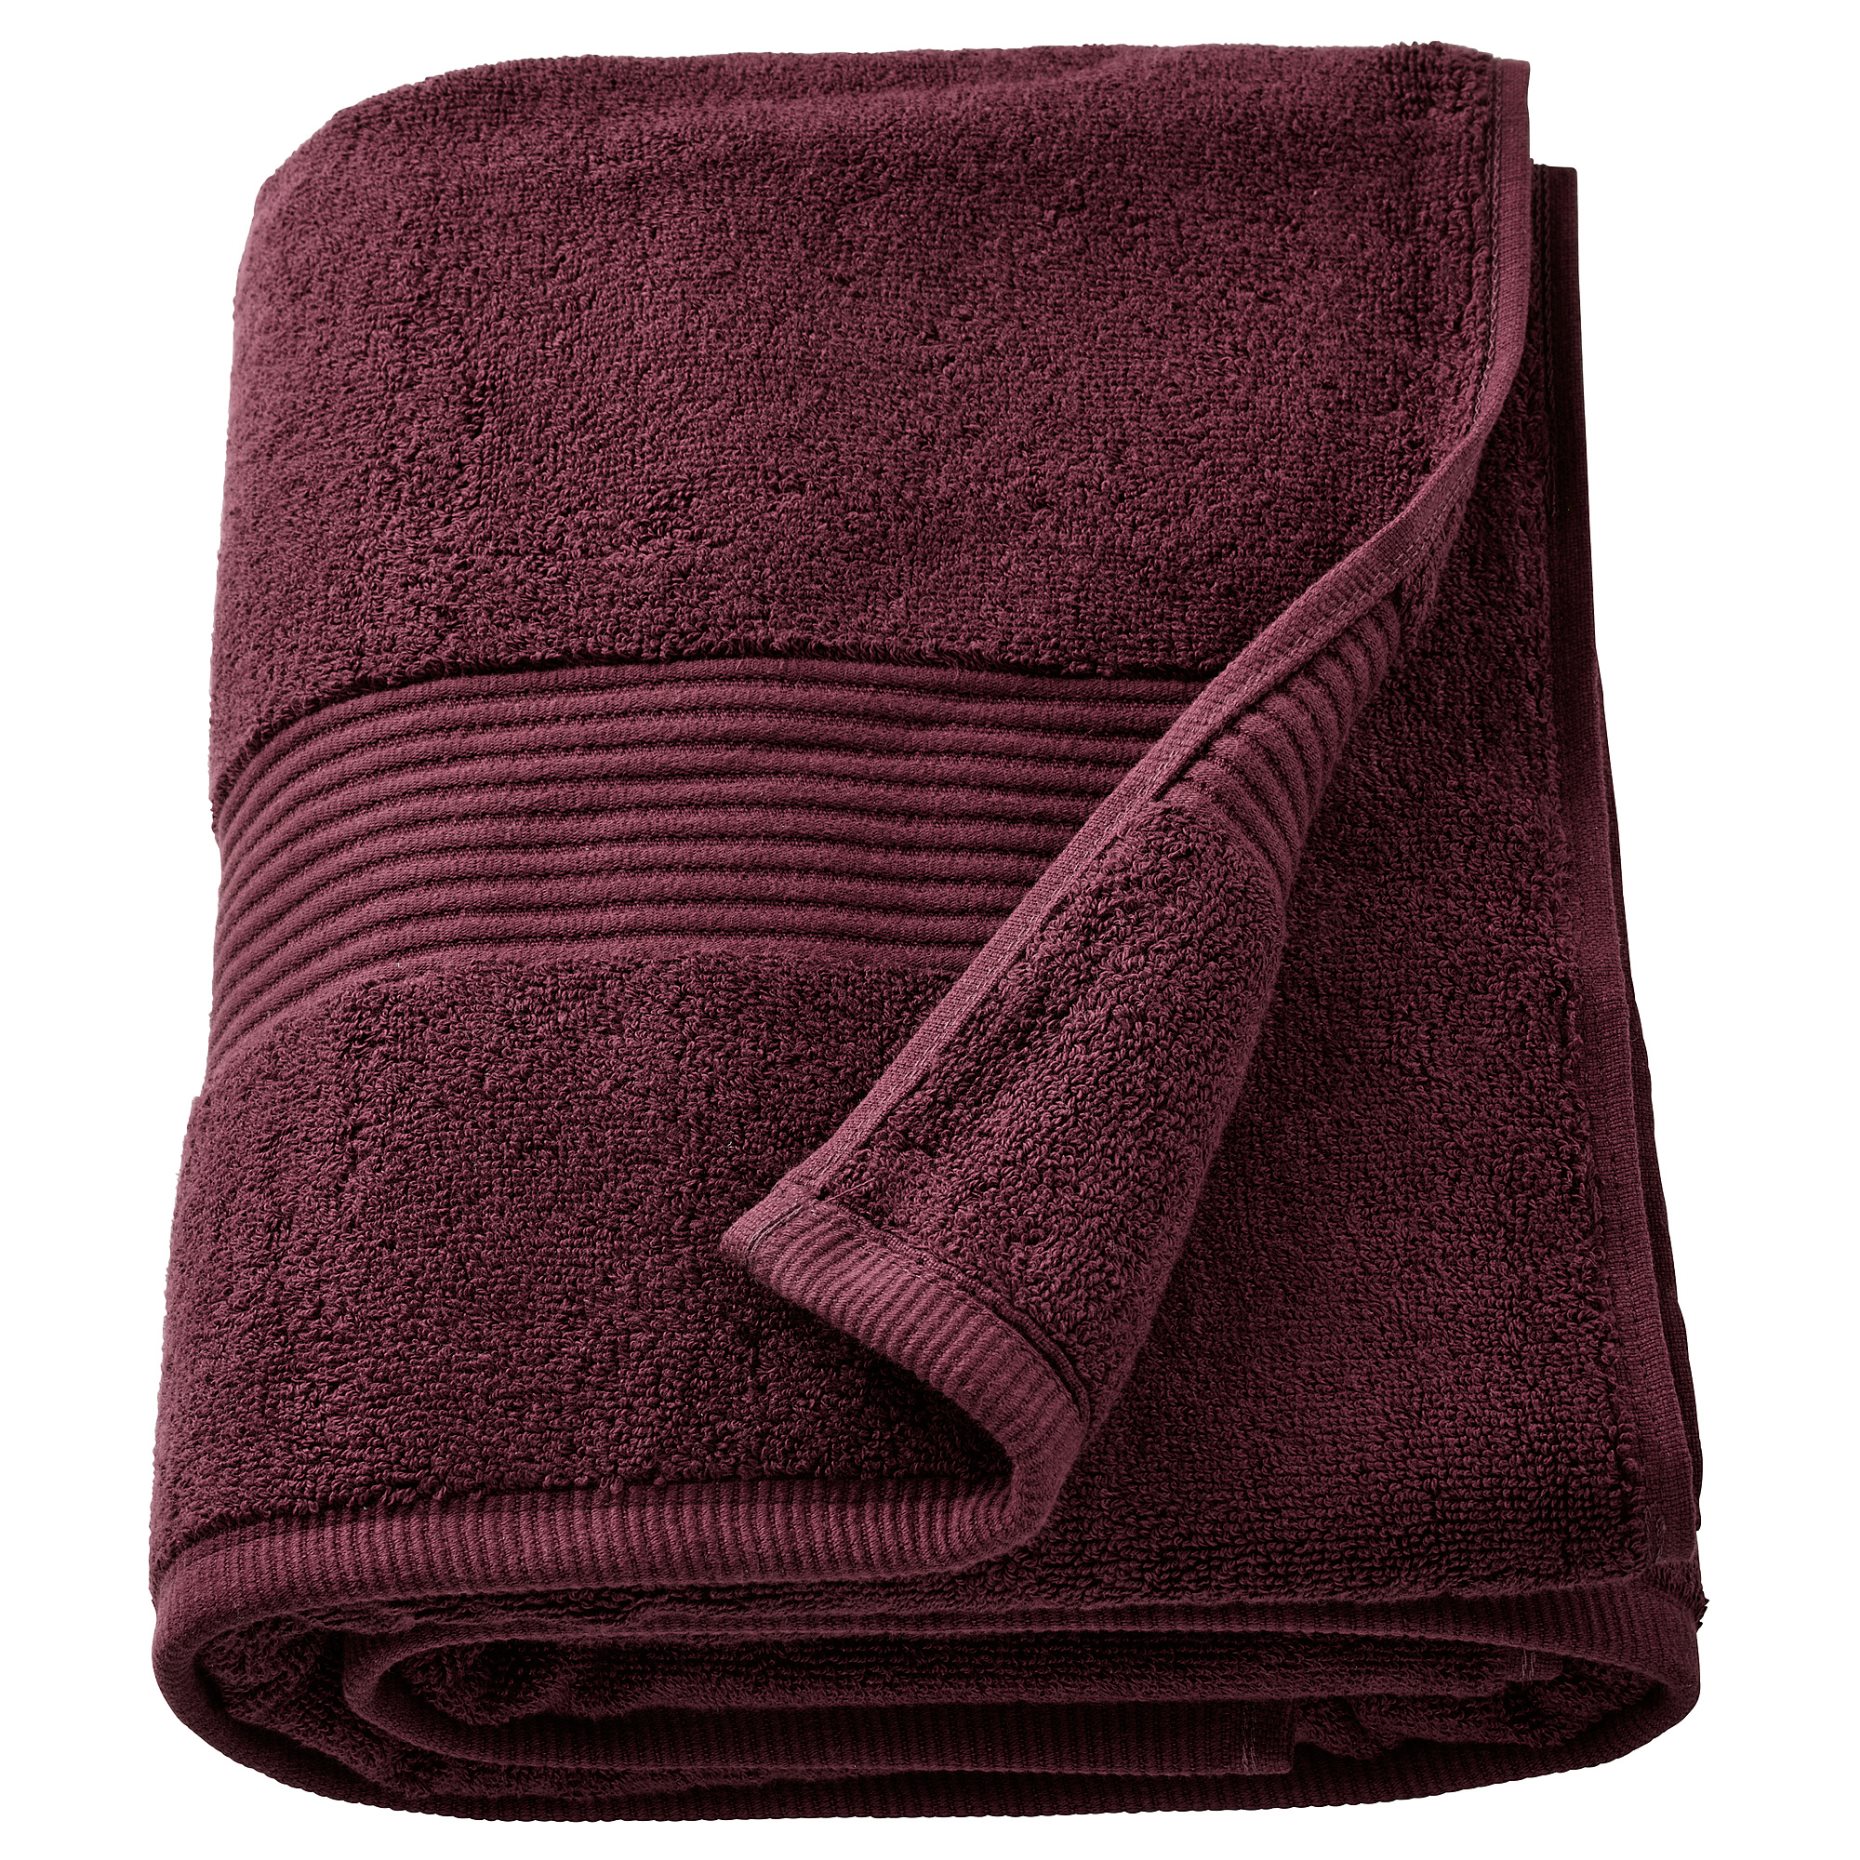 FREDRIKSJÖN, bath towel, 100x150 cm, 805.527.52